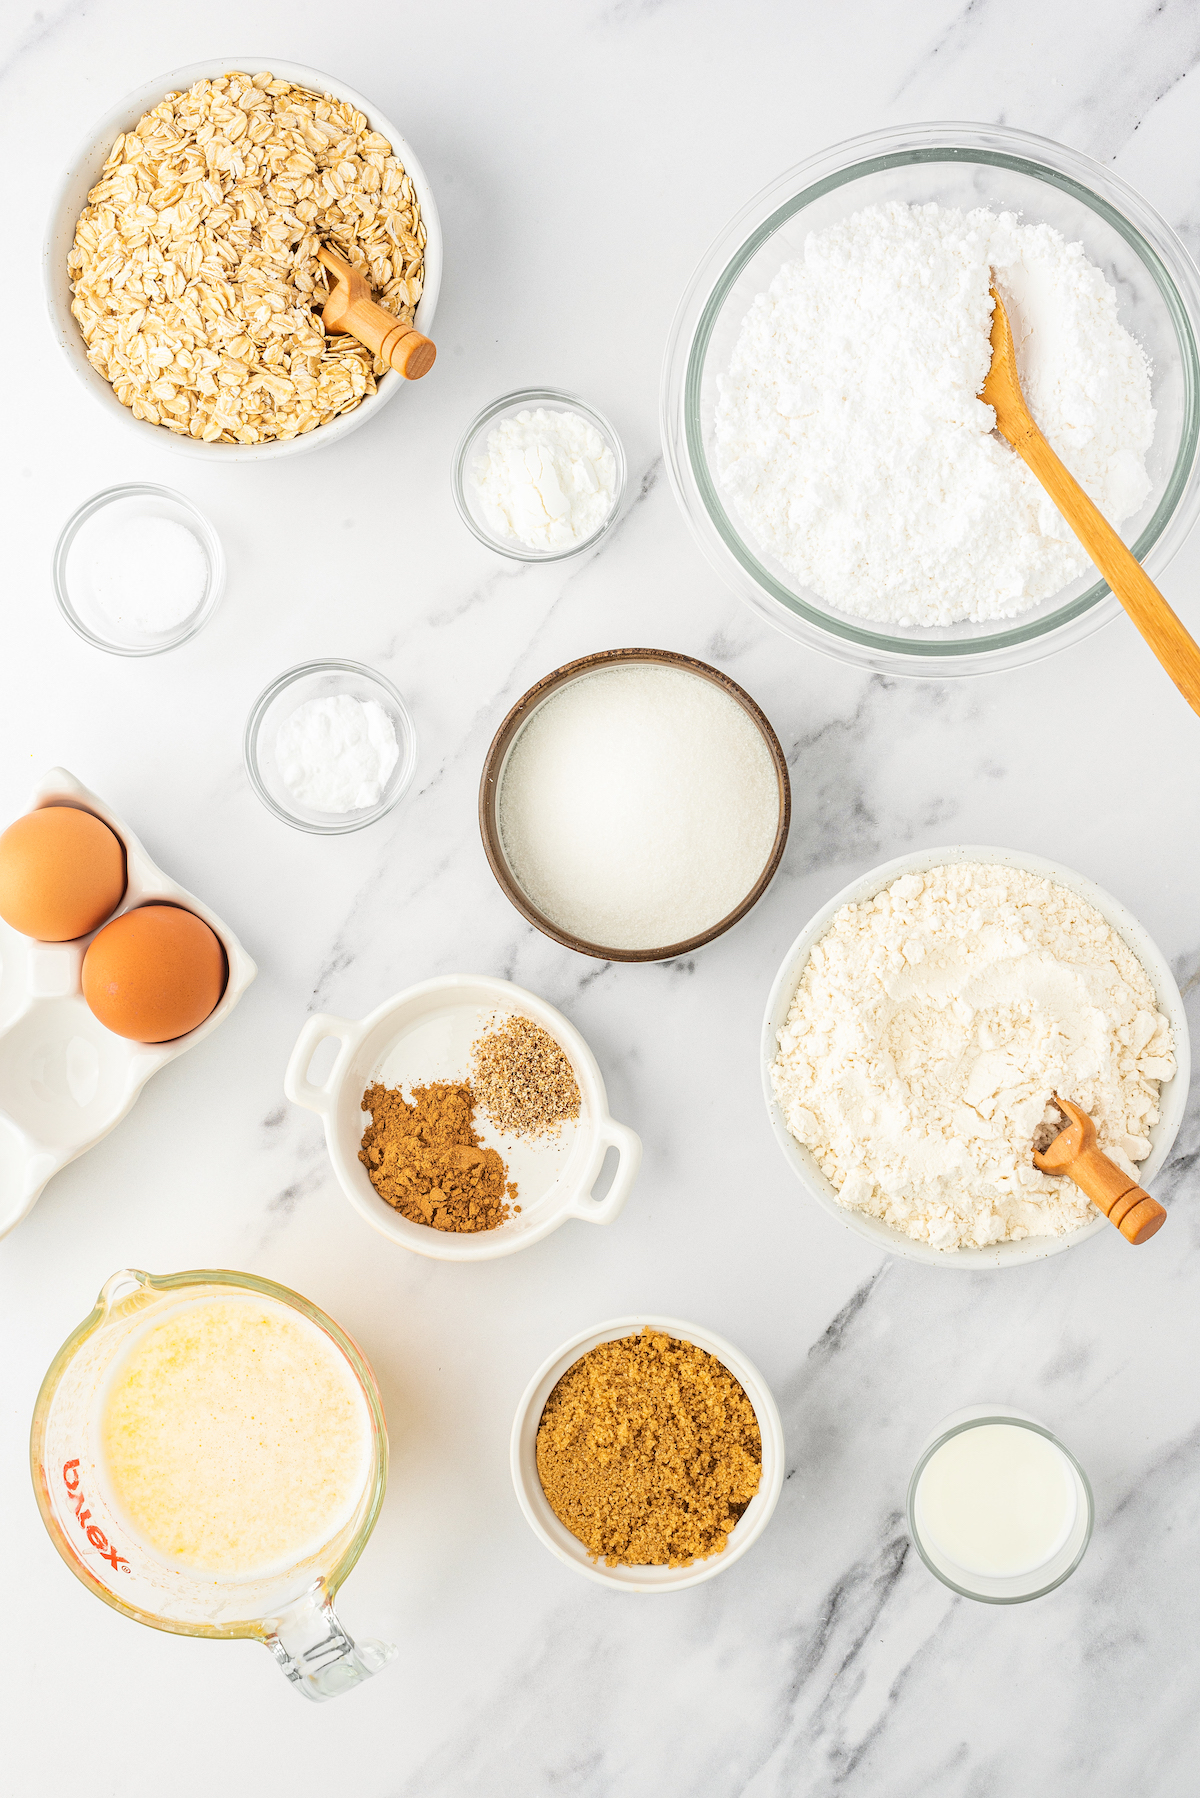 From top: Oats, powdered sugar, baking powder, baking soda, salt, eggs, sugar, flour, melted butter, brown sugar, milk.